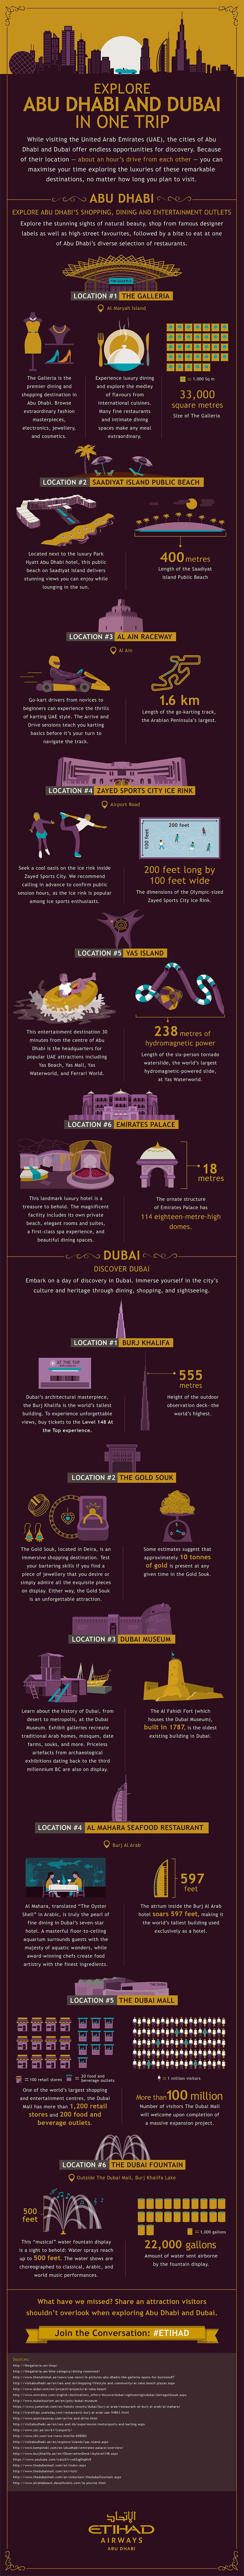 EXPLORE ABU DHABI AND DUBAI IN ONE TRIP | INFOGRAPHIC